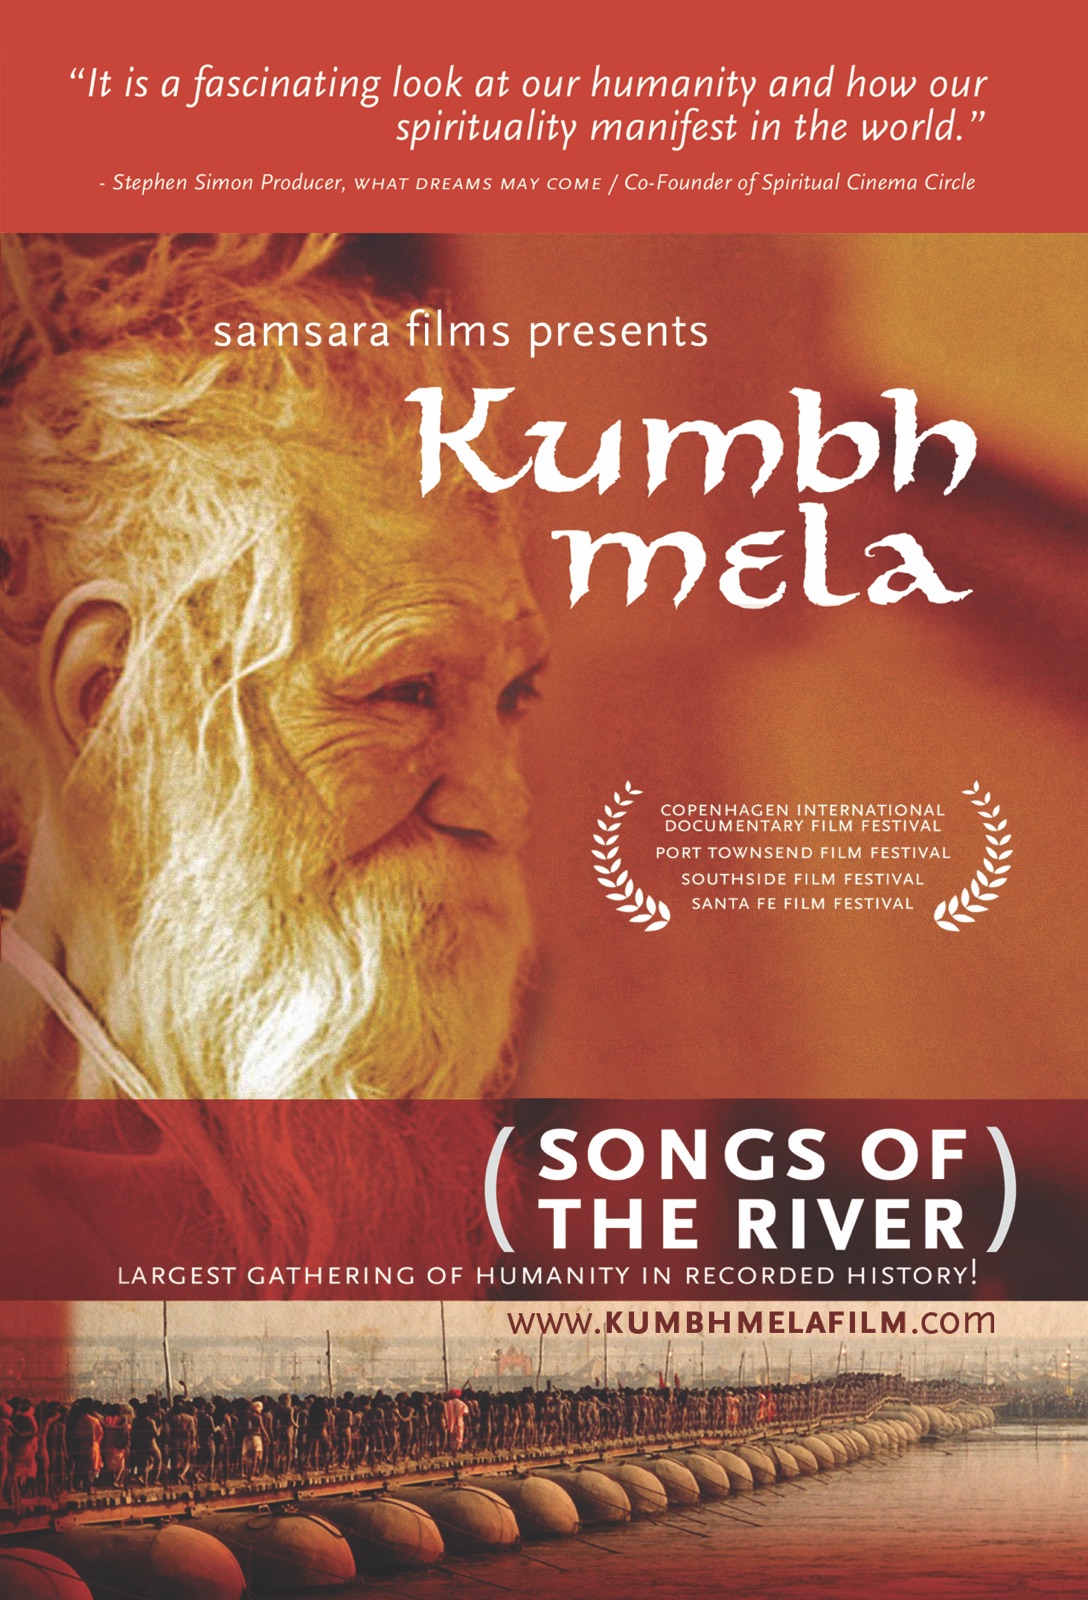 Kumbh Mela: Songs of the River (2004) Screenshot 2 